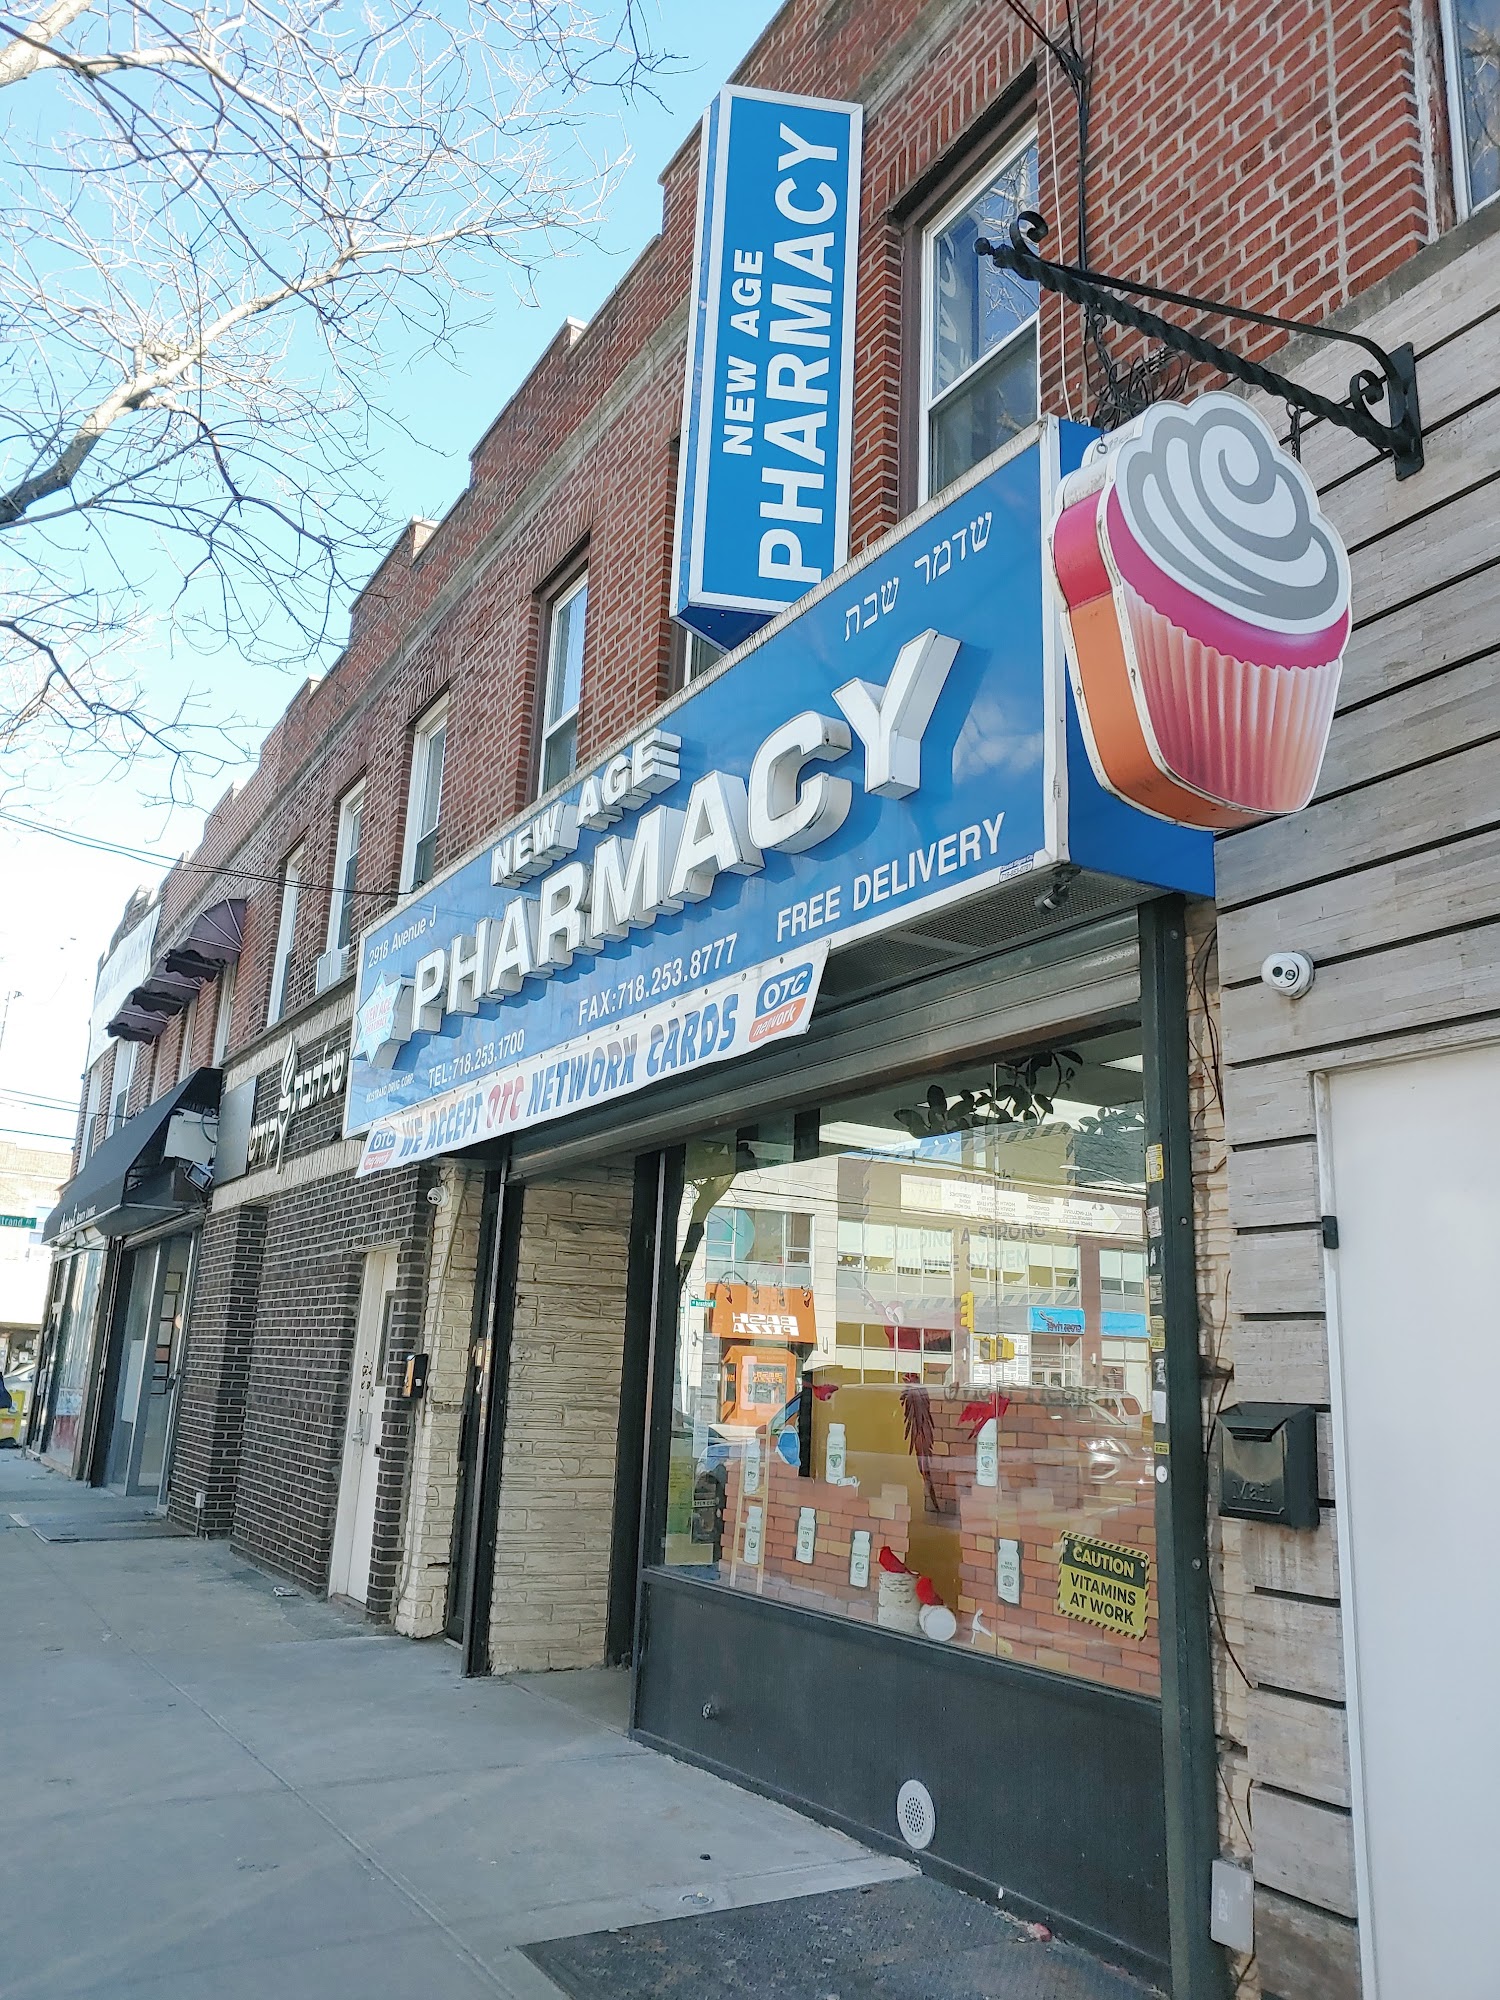 New Age Pharmacy